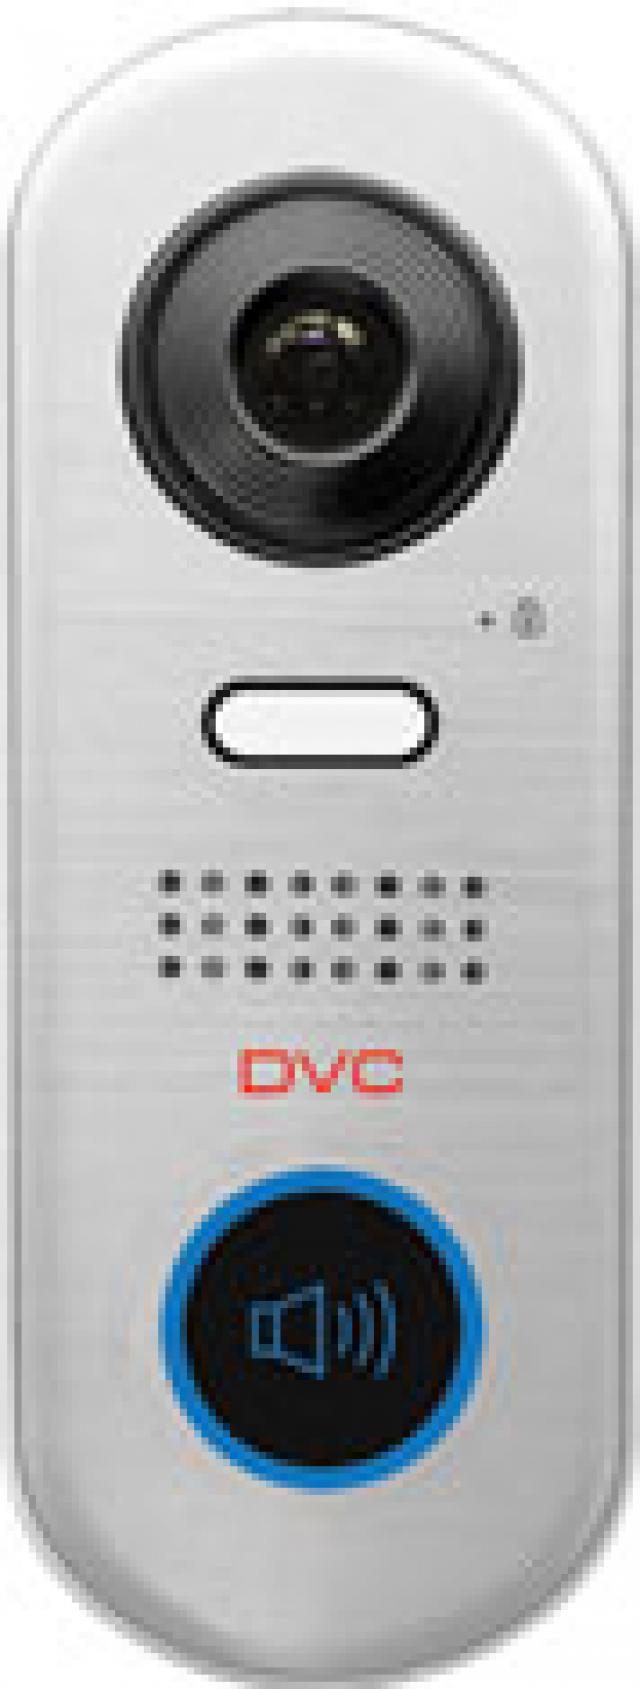 Interfoni i videointerfoni - DVC DT610/FE pozivna jedinica kompaktnog dizajna s Fish-Eye kamerom u boji - Avalon ltd